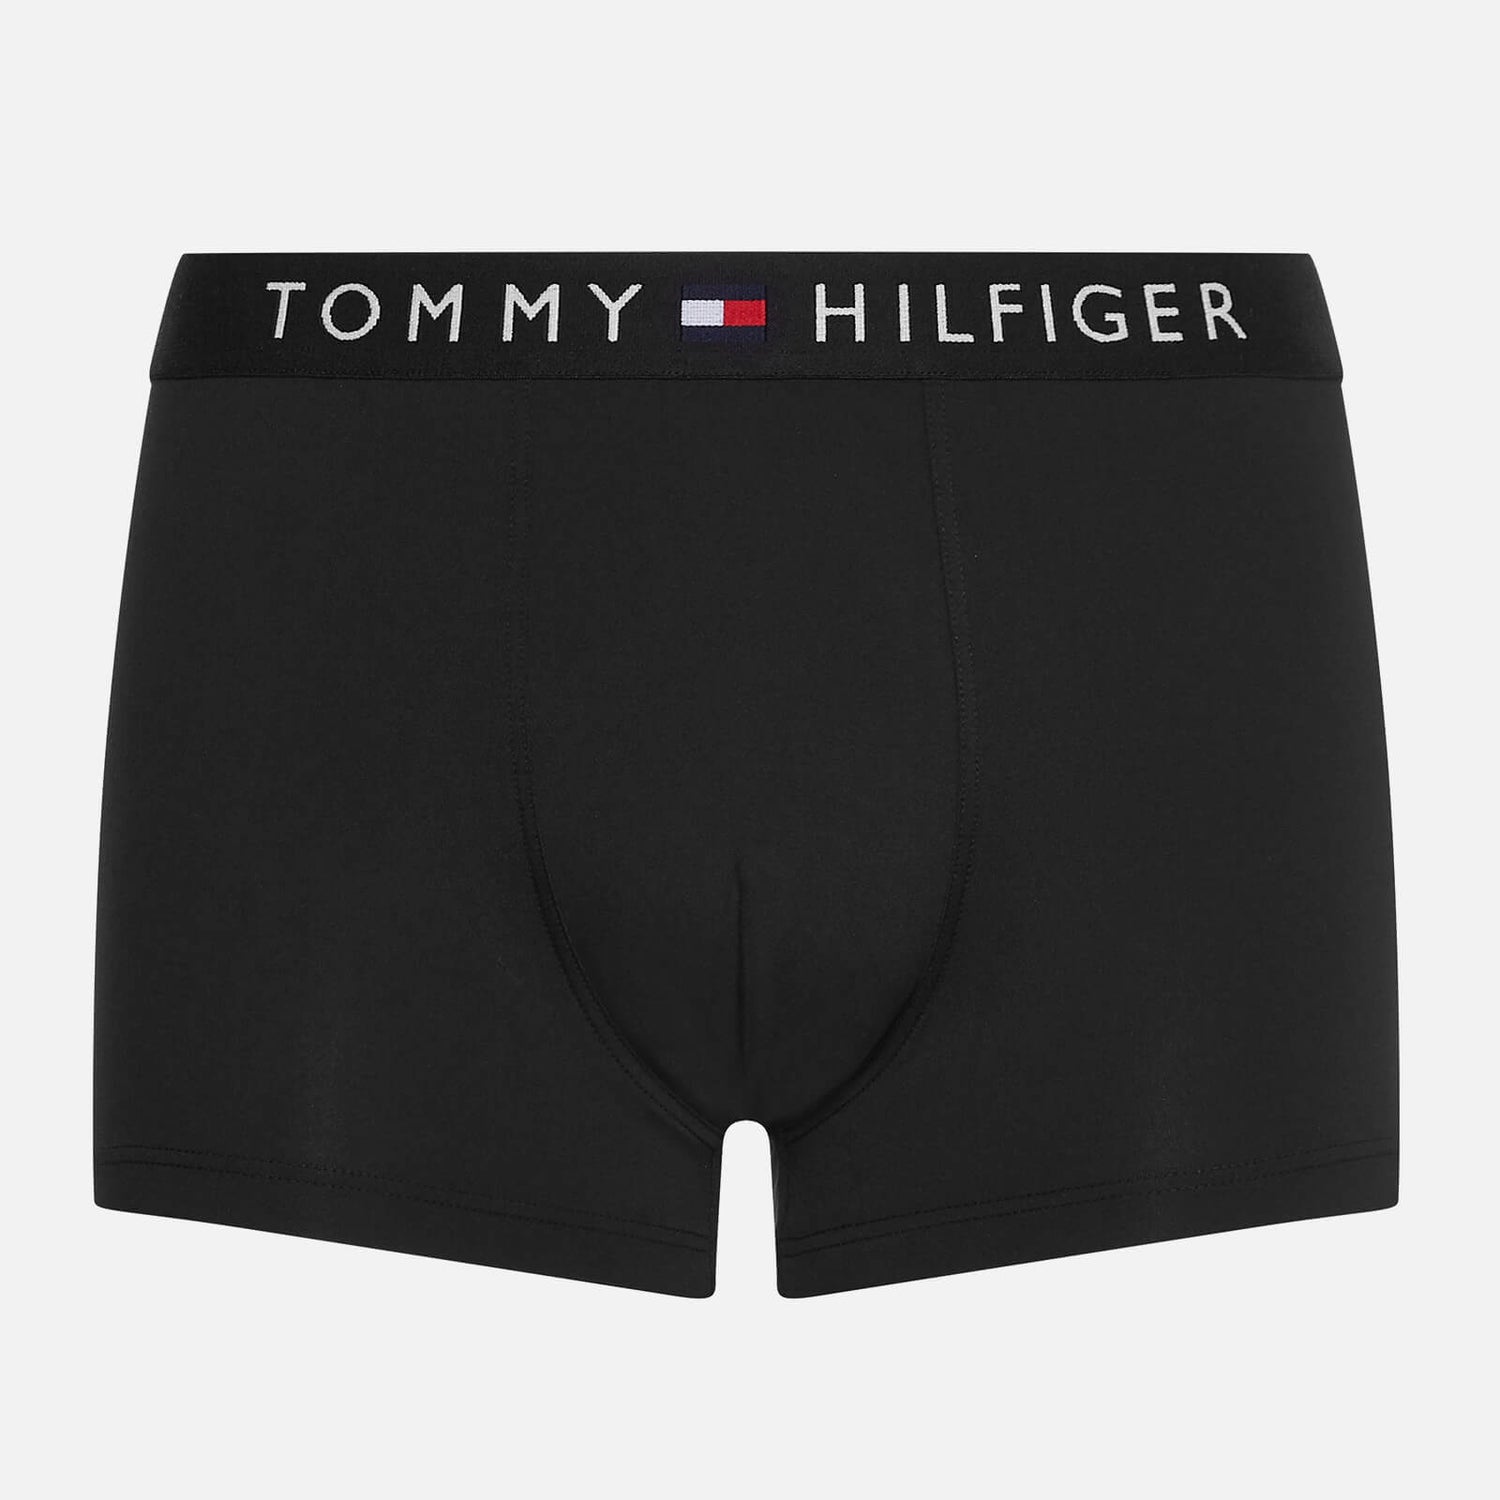 Tommy Hilfiger Men's Waistband Logo Trunks - Black